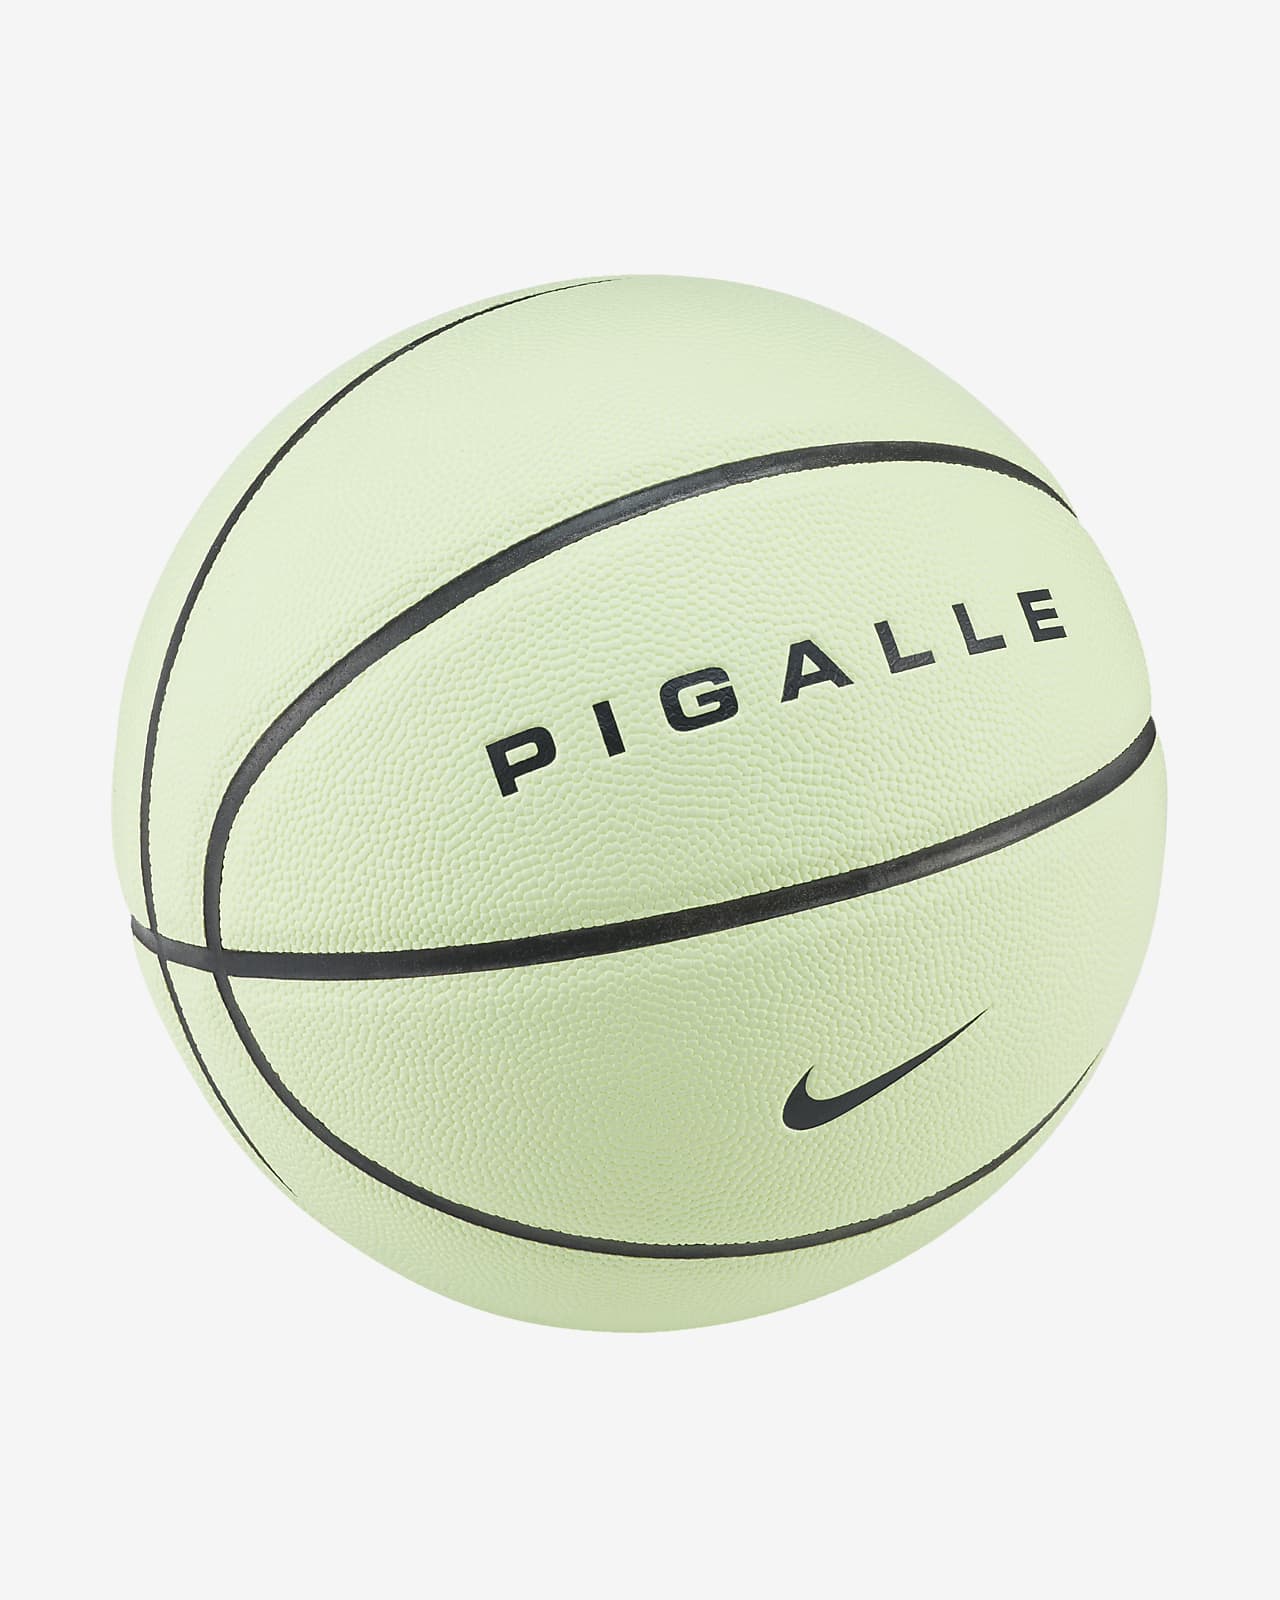 Nike公式 ナイキ X ピガール バスケットボール オンラインストア 通販サイト